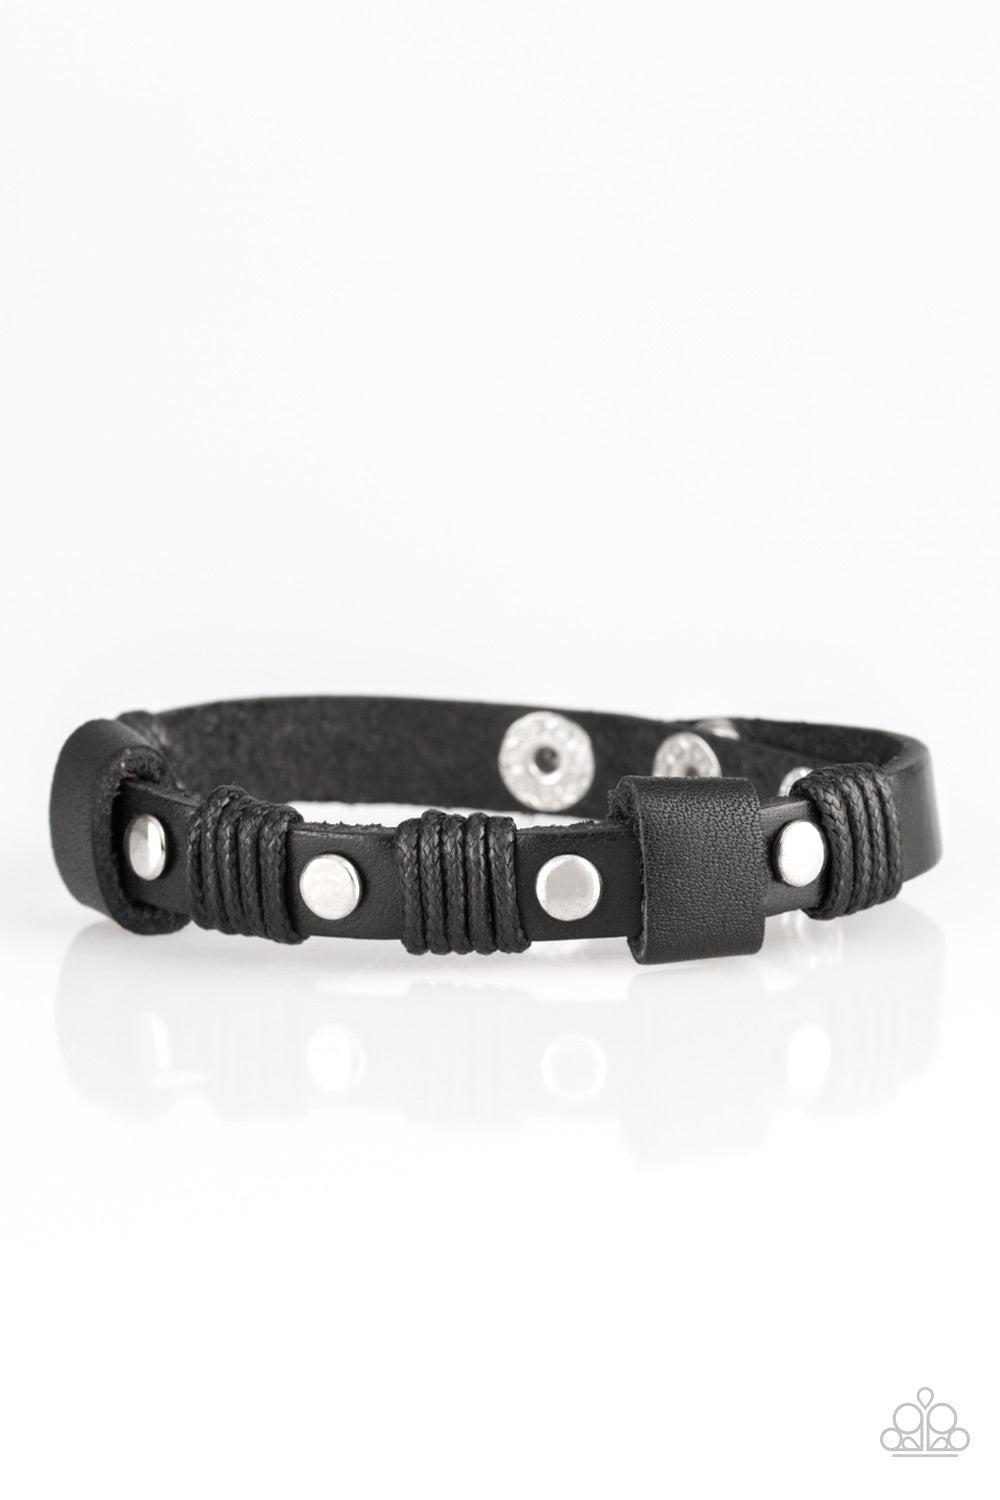 Road Burner Black Urban Wrap Bracelet - Paparazzi Accessories- lightbox - CarasShop.com - $5 Jewelry by Cara Jewels